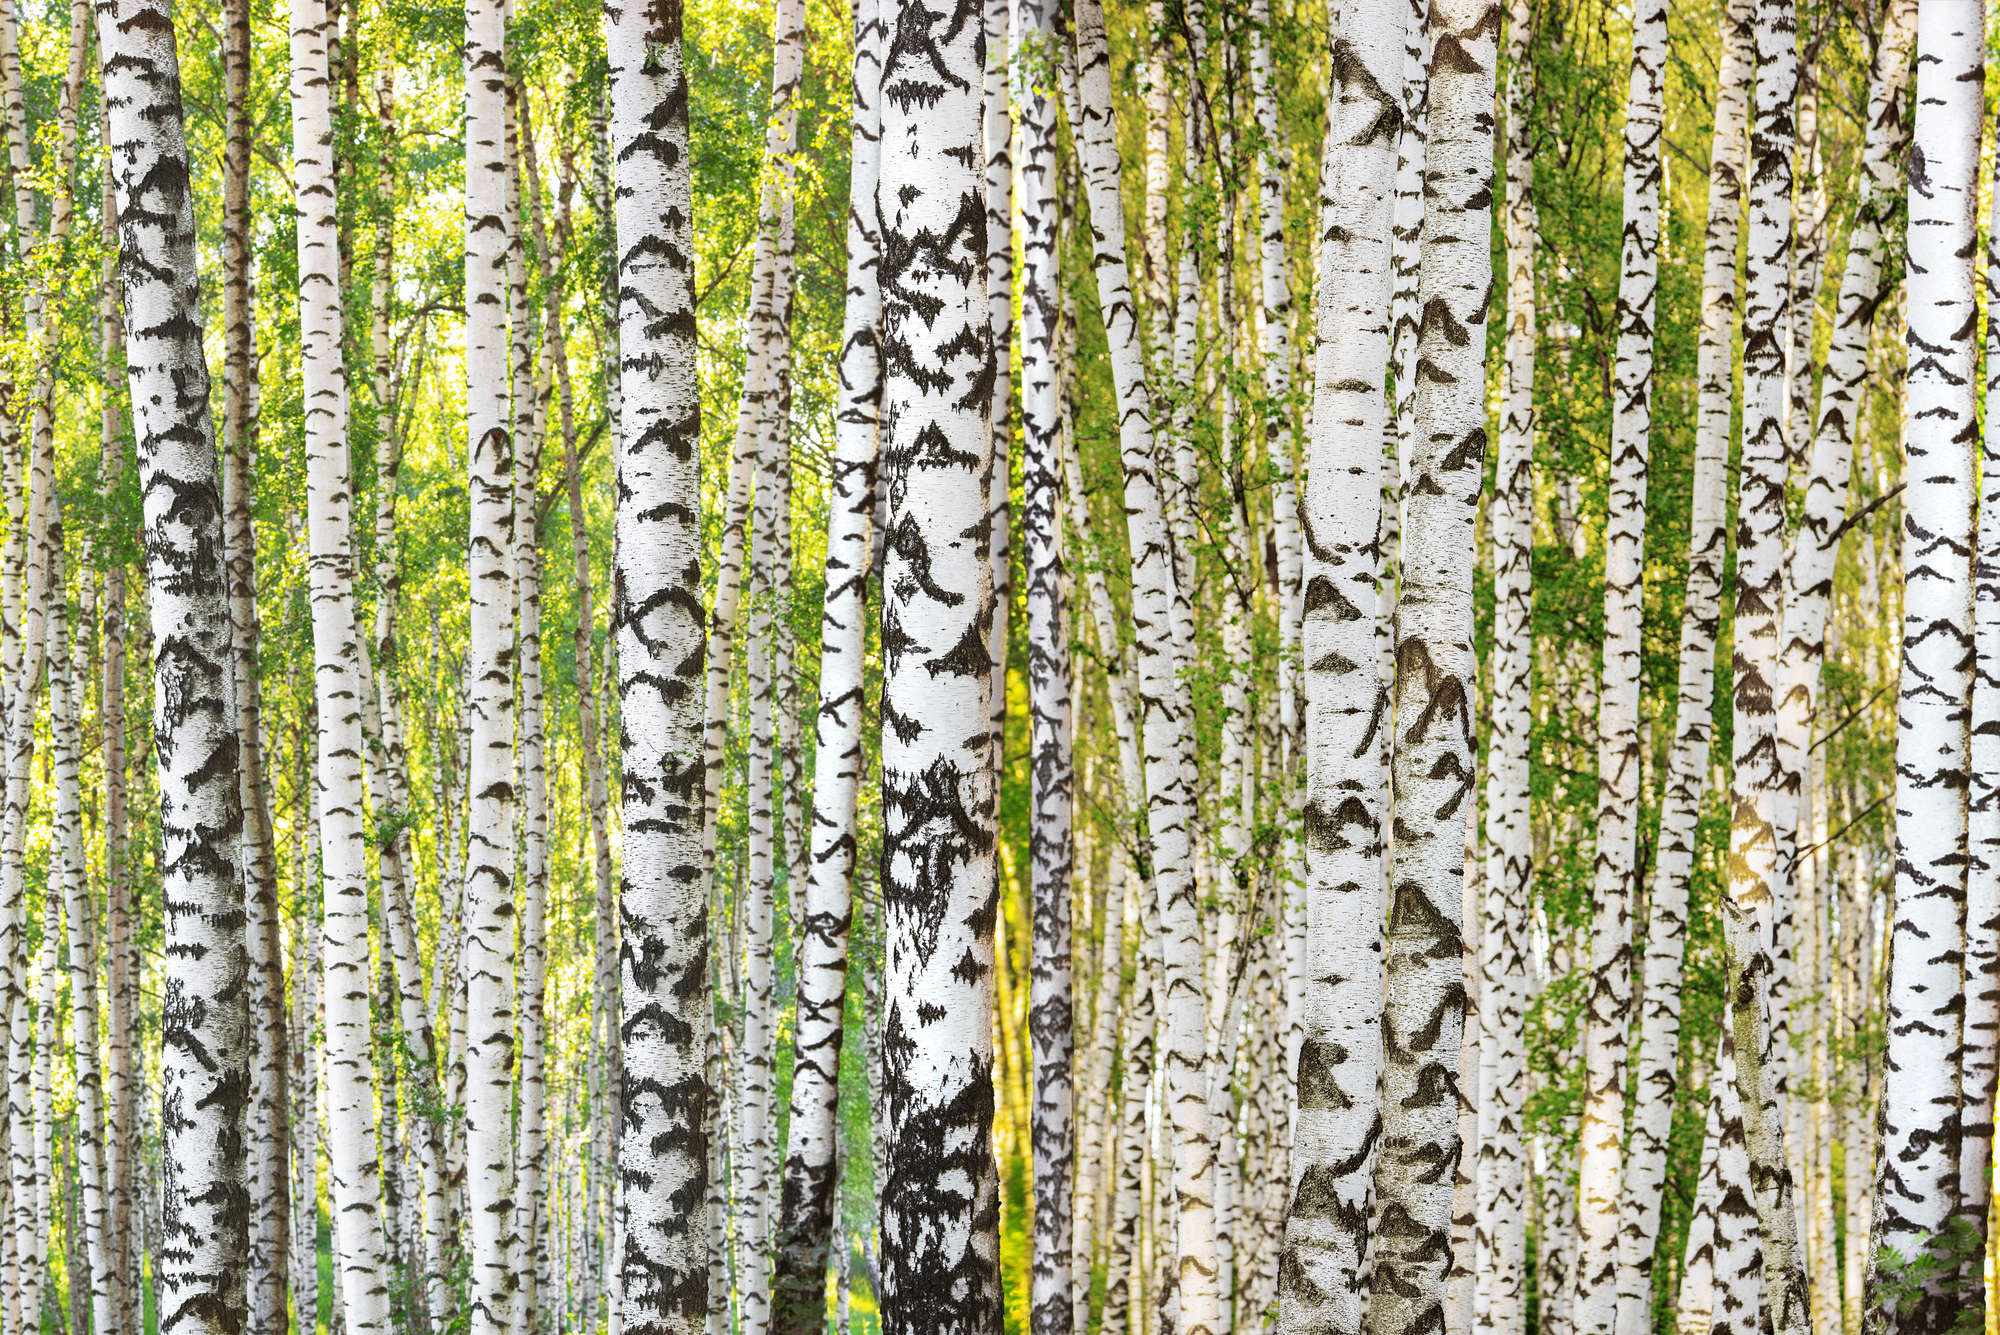             Birch forest mural tree trunk motif on premium smooth fleece
        